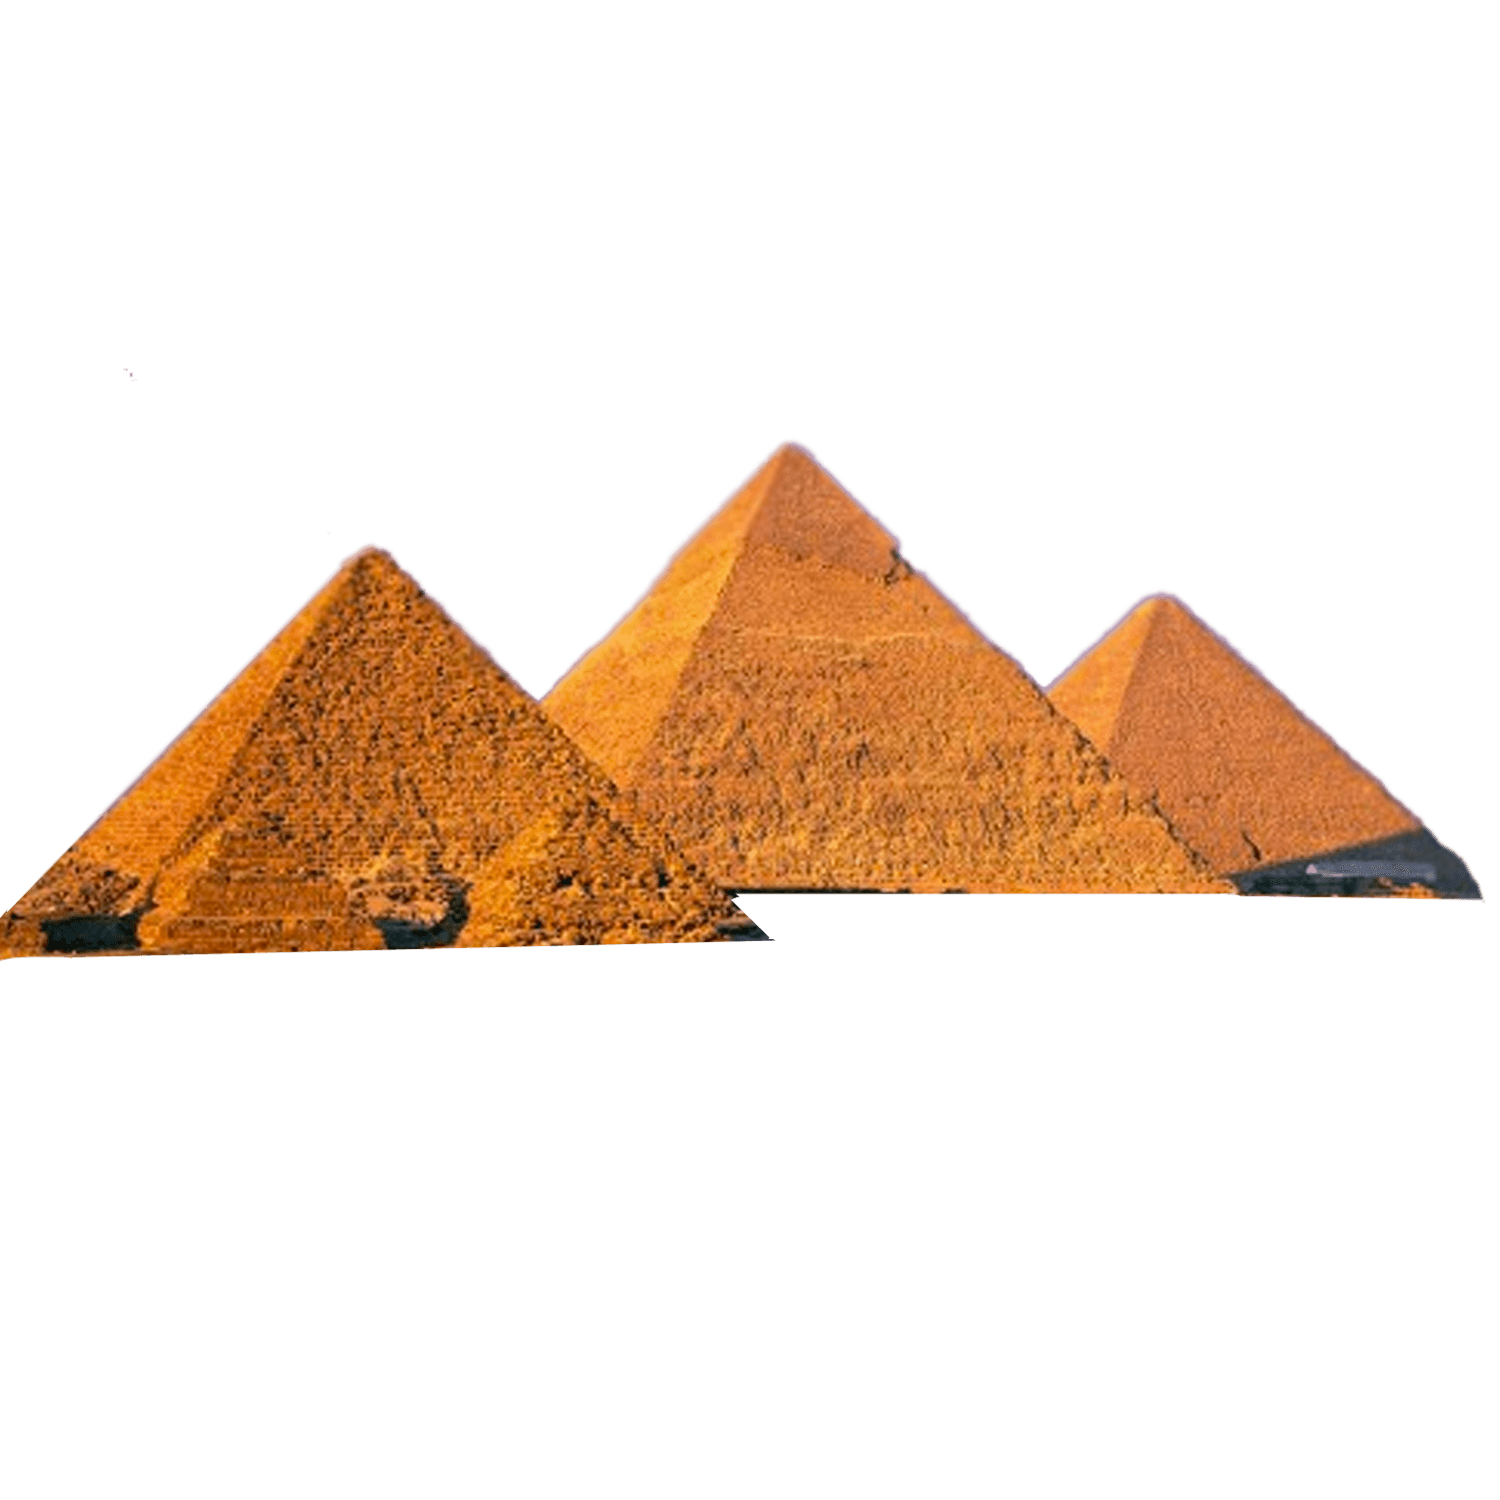 Pyramid Png Clipart PNG Image